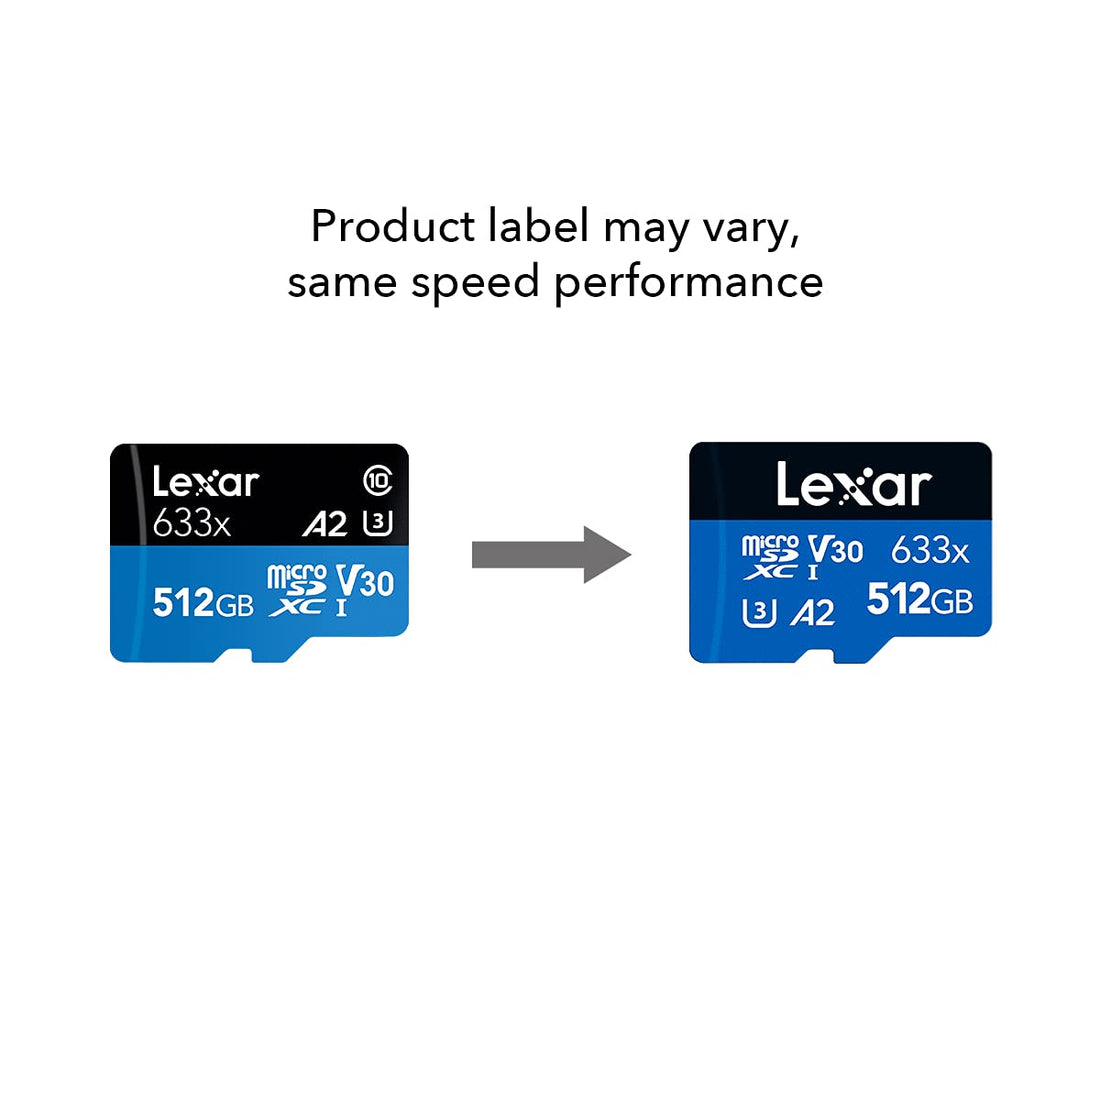 Lexar 512GB microSDXC High-Performance 633x Card with Adapter